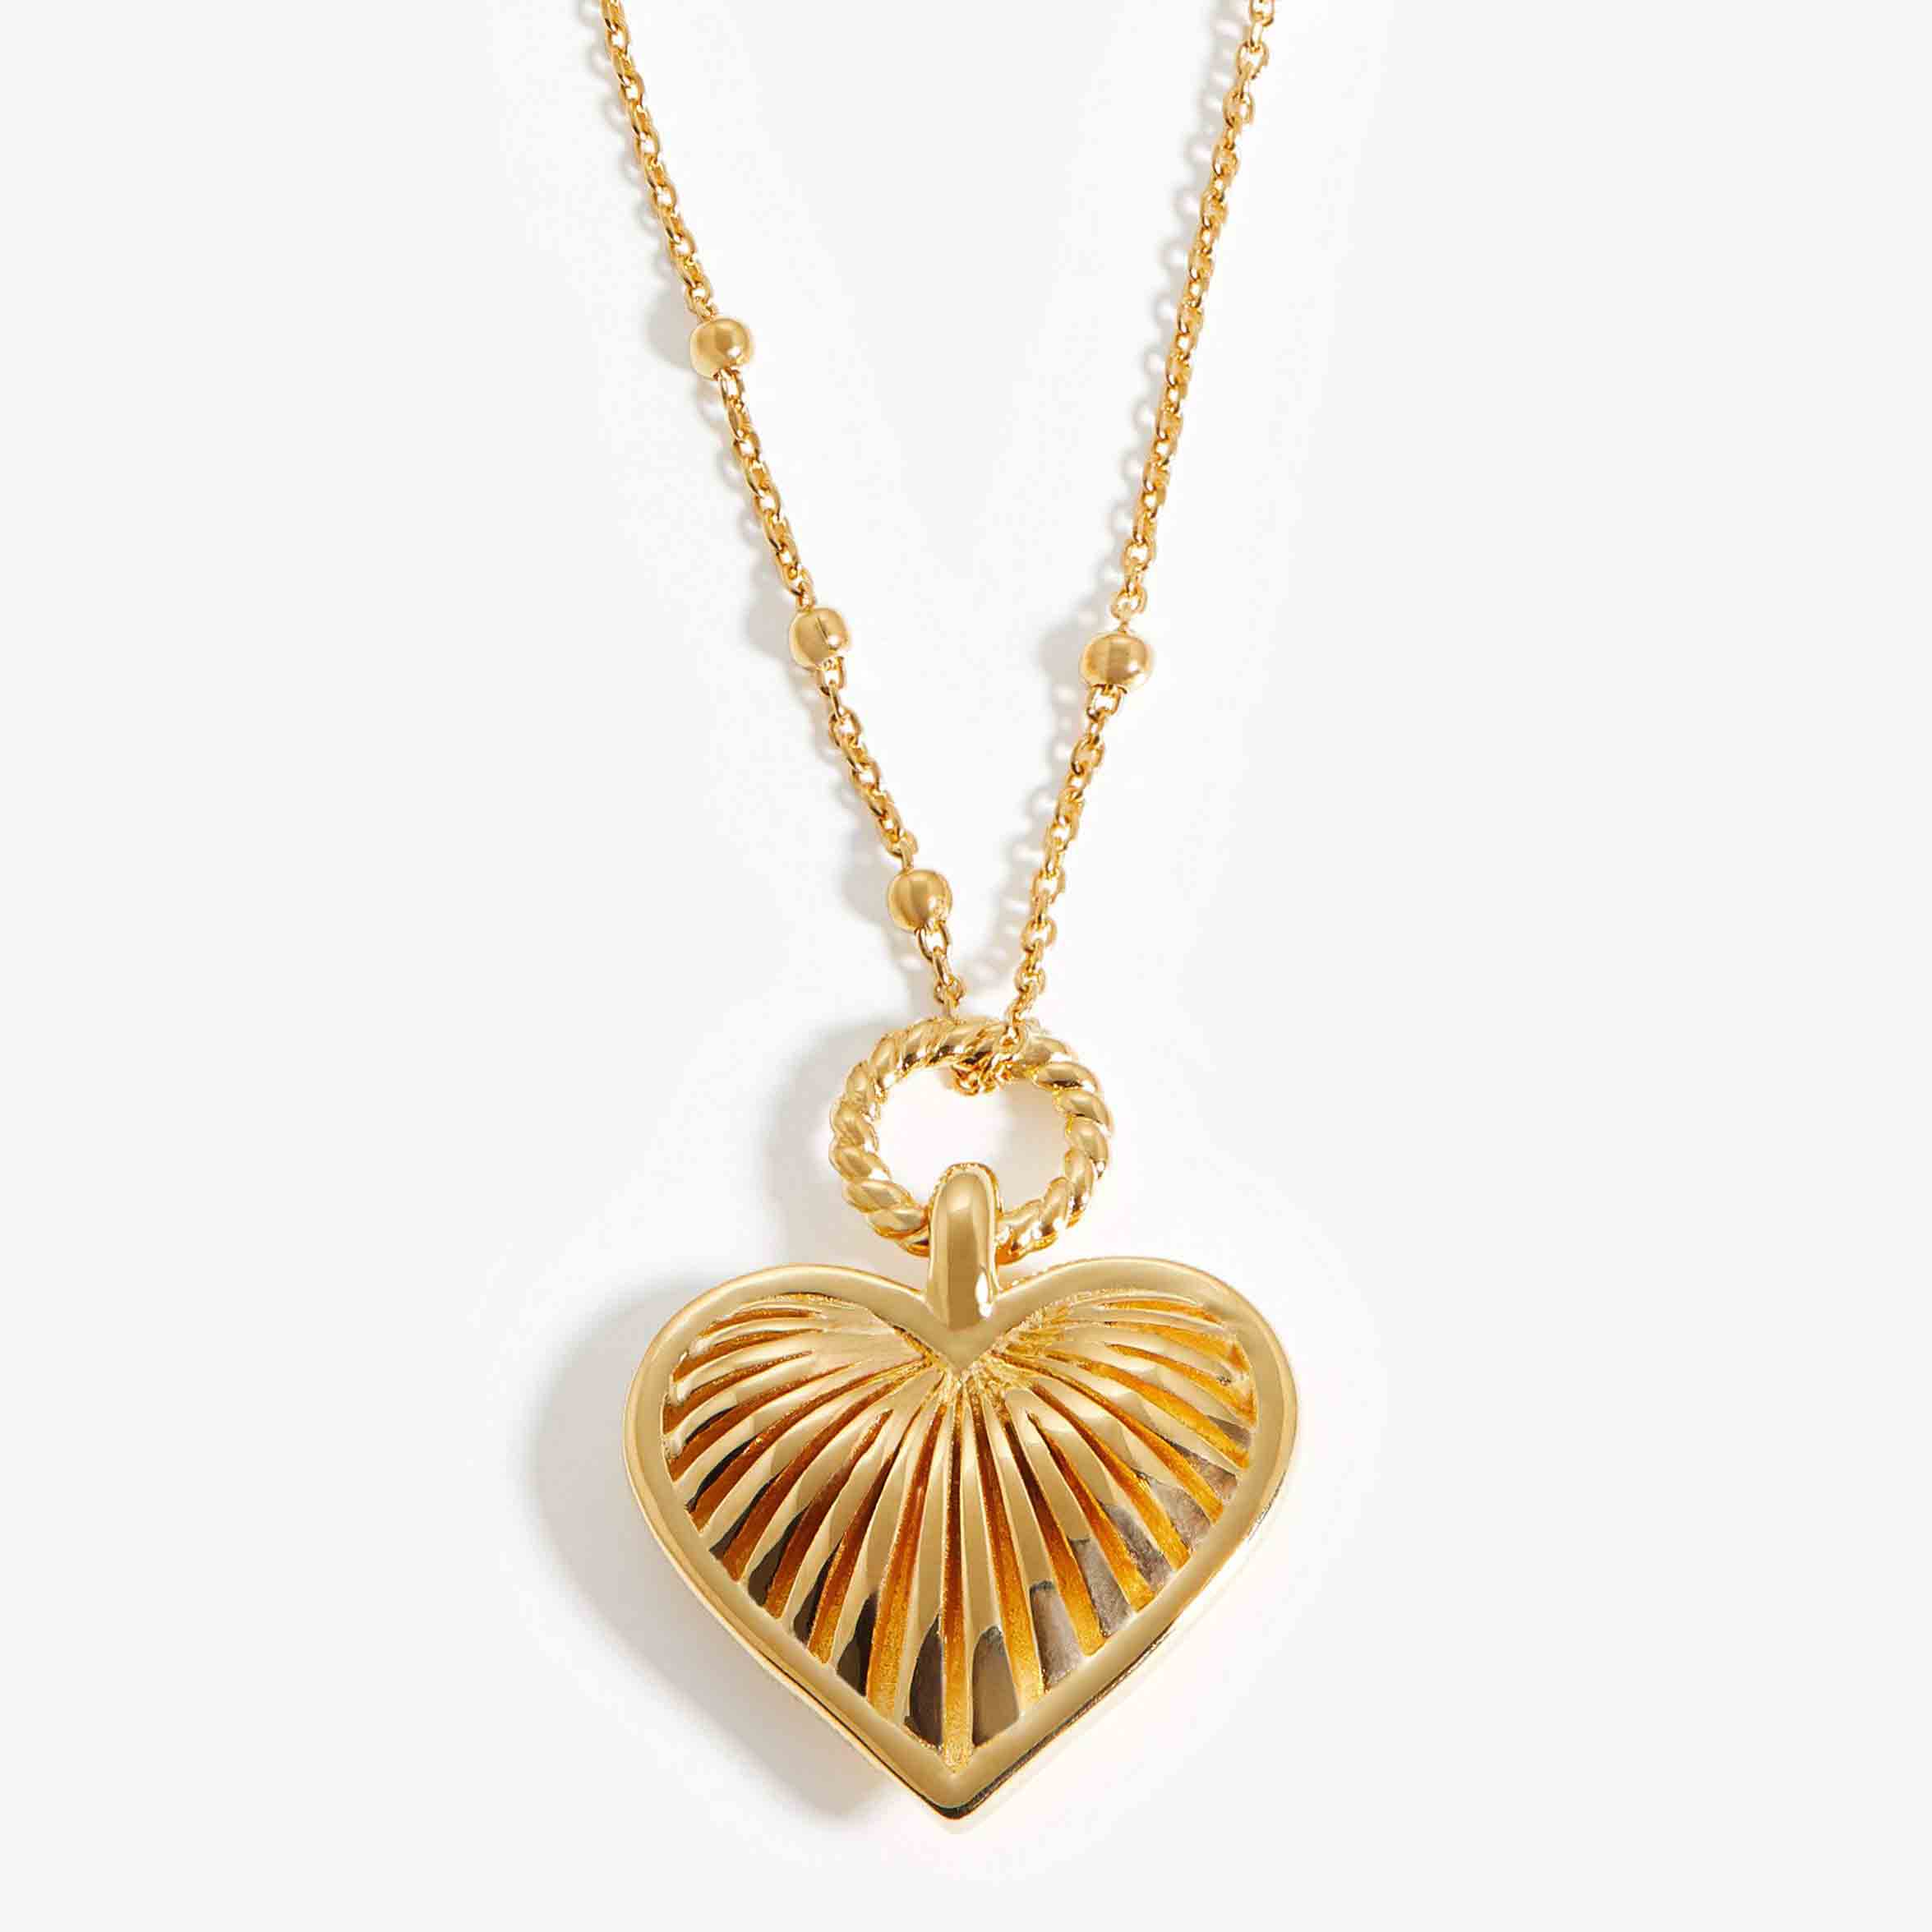 produsen perhiasan emas vermeil membuat kalung pesona hati dari perak berlapis emas 18 karat